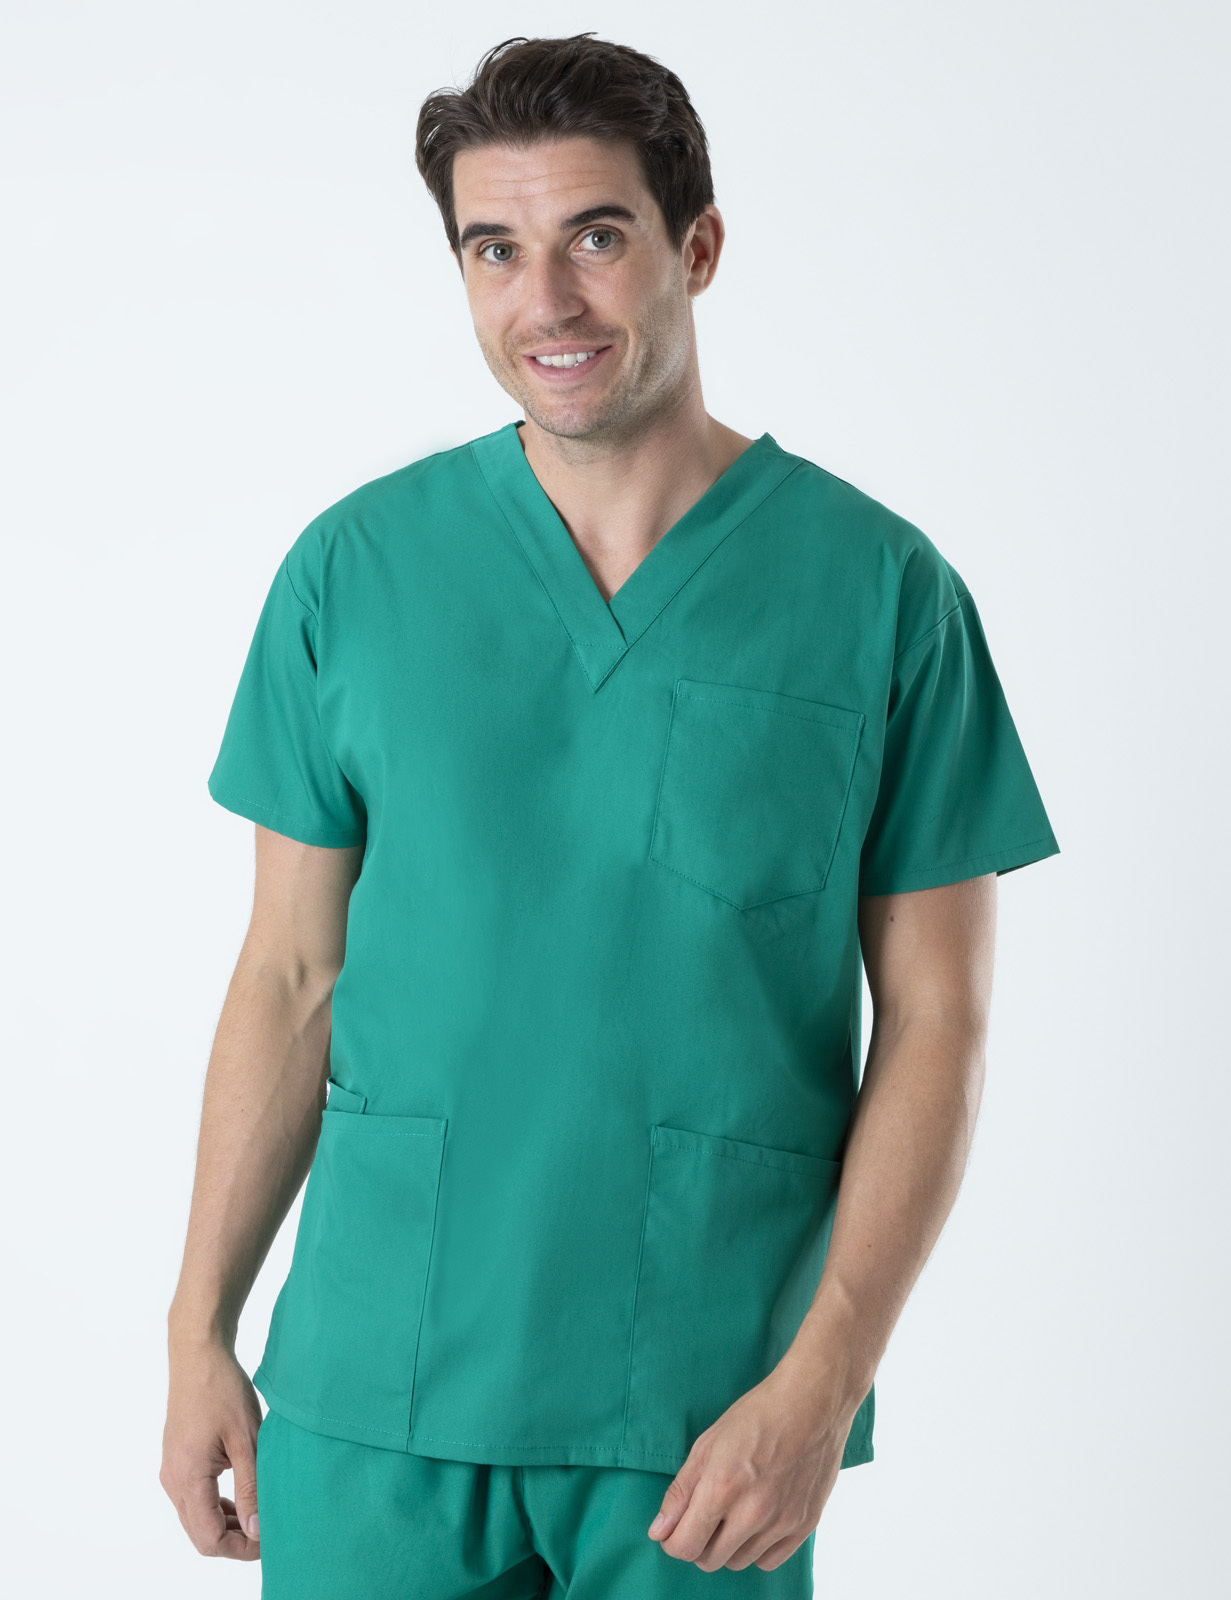 Royal Hobart Hospital - Emergency Doctor (4 Pocket Scrub top and Cargo Pants in Hunter incl Logos)